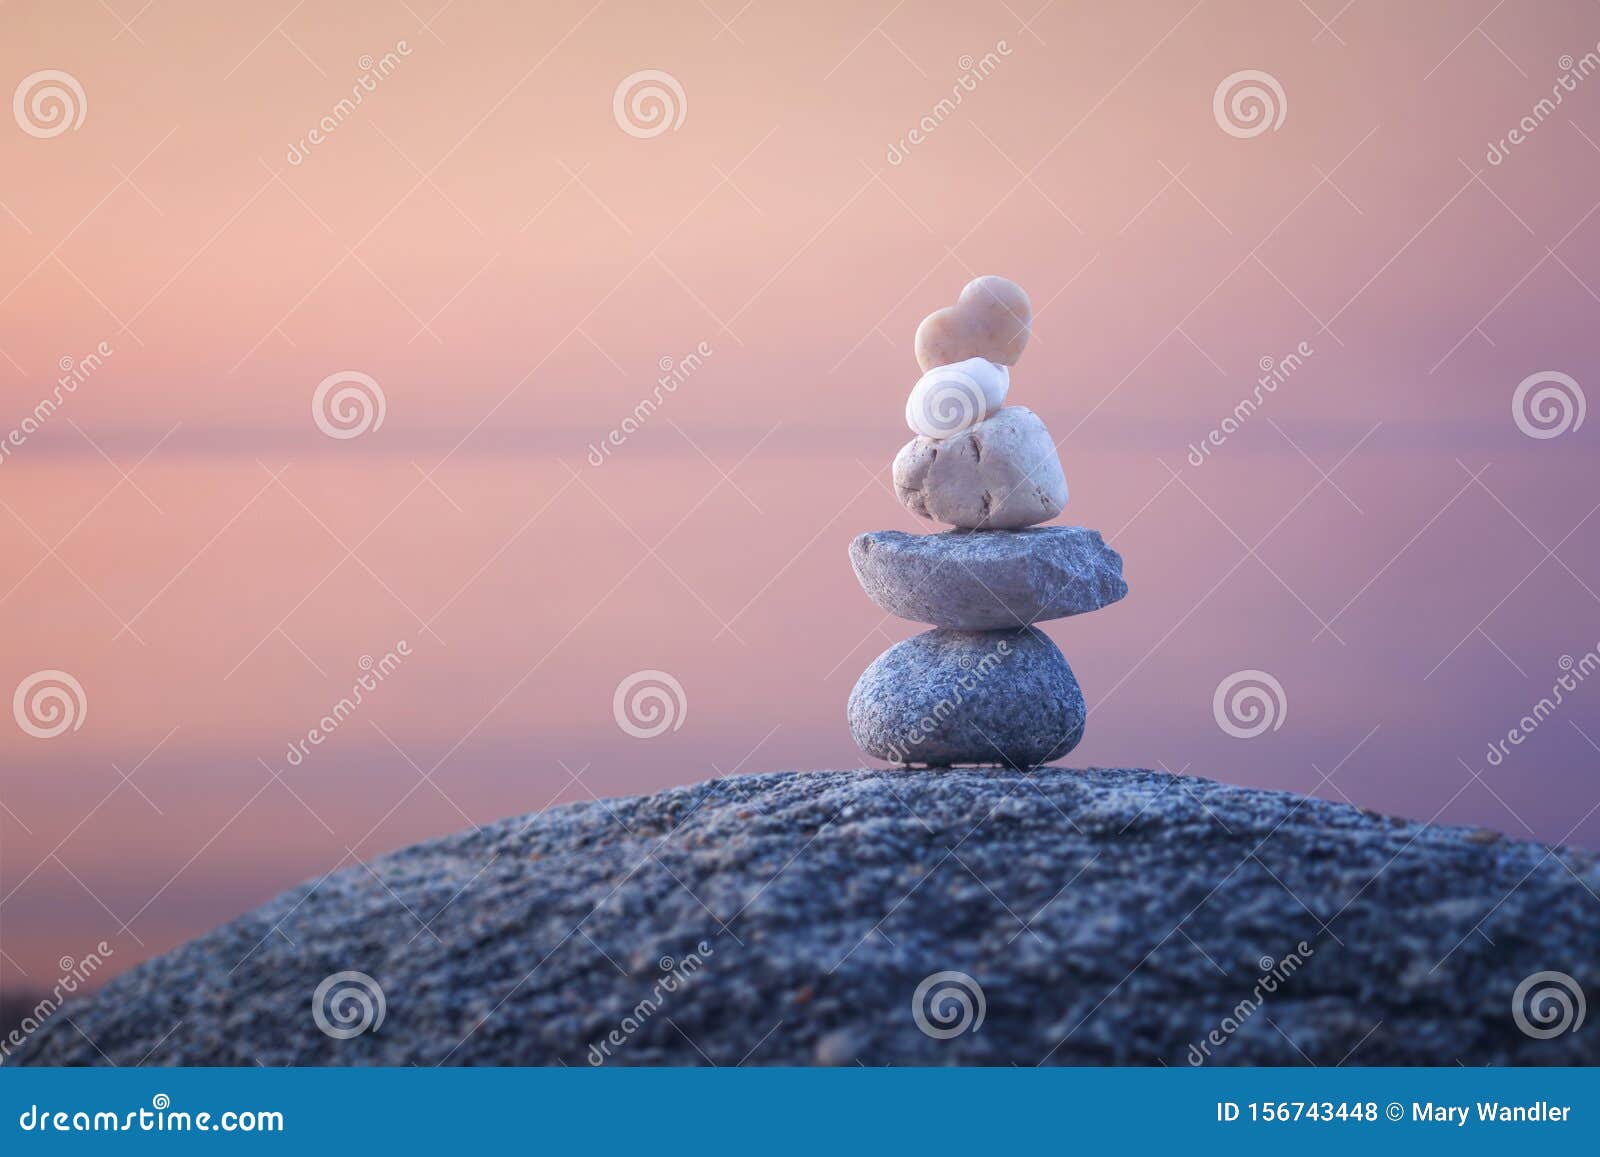 calming zen rock stack by a lake